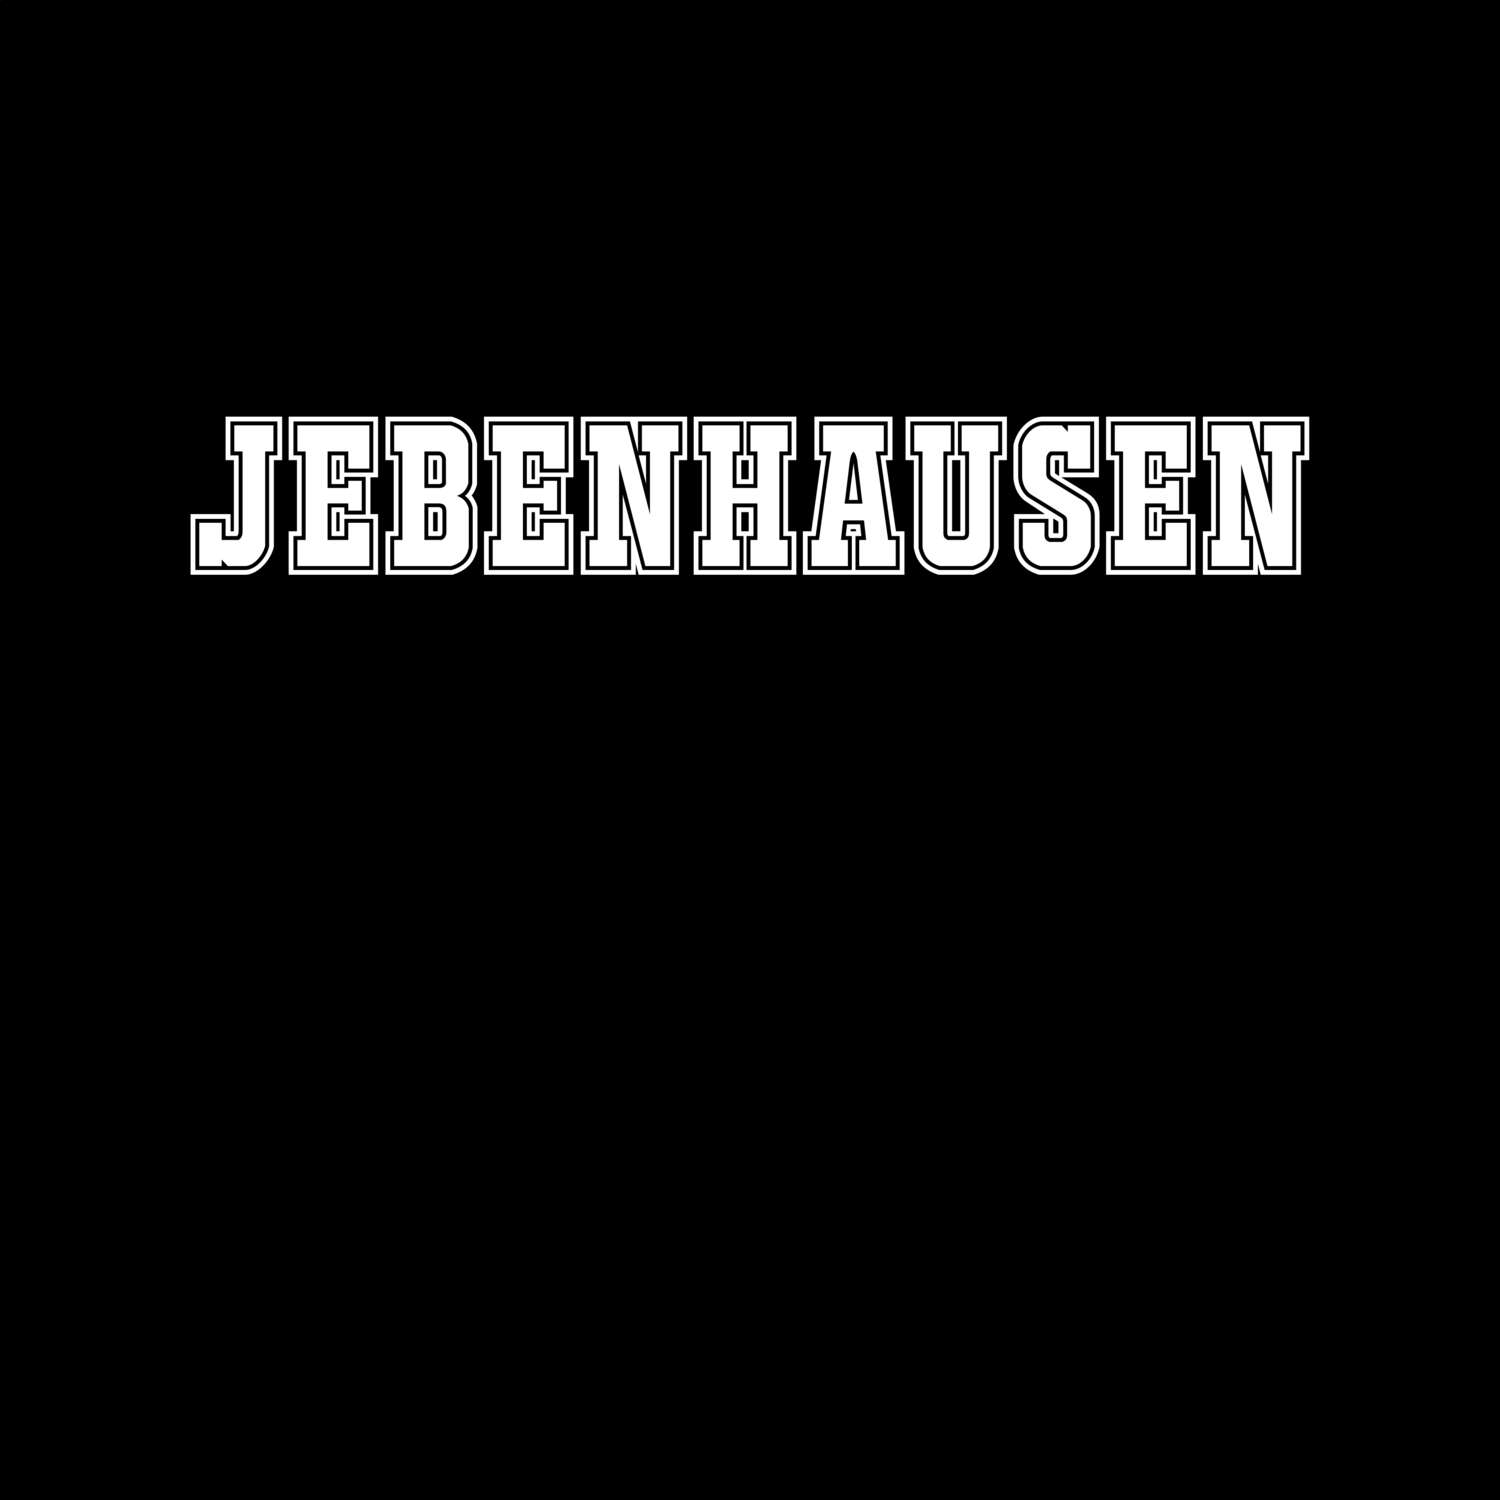 Jebenhausen T-Shirt »Classic«